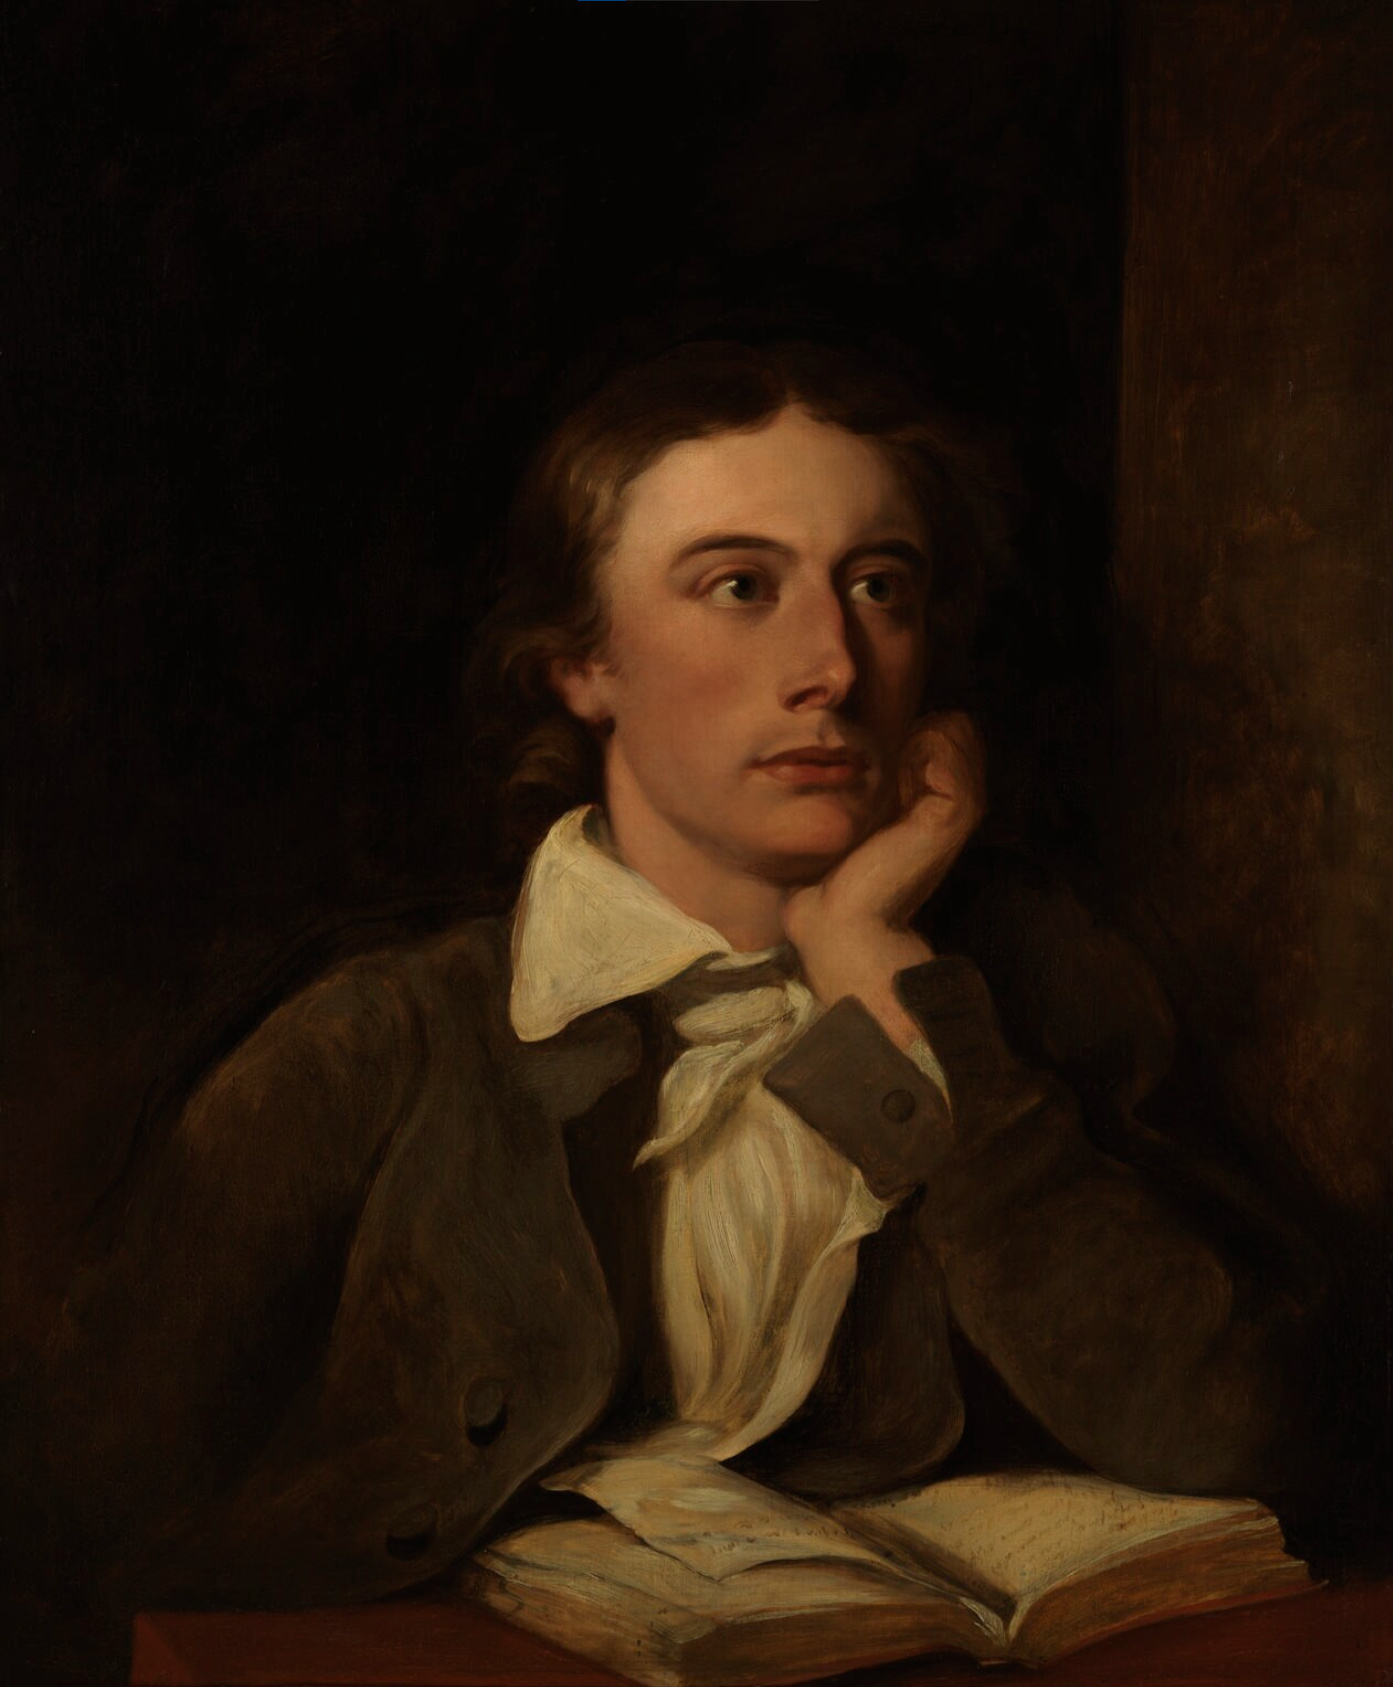 John Keats, by William Hilton (died 1839). See...